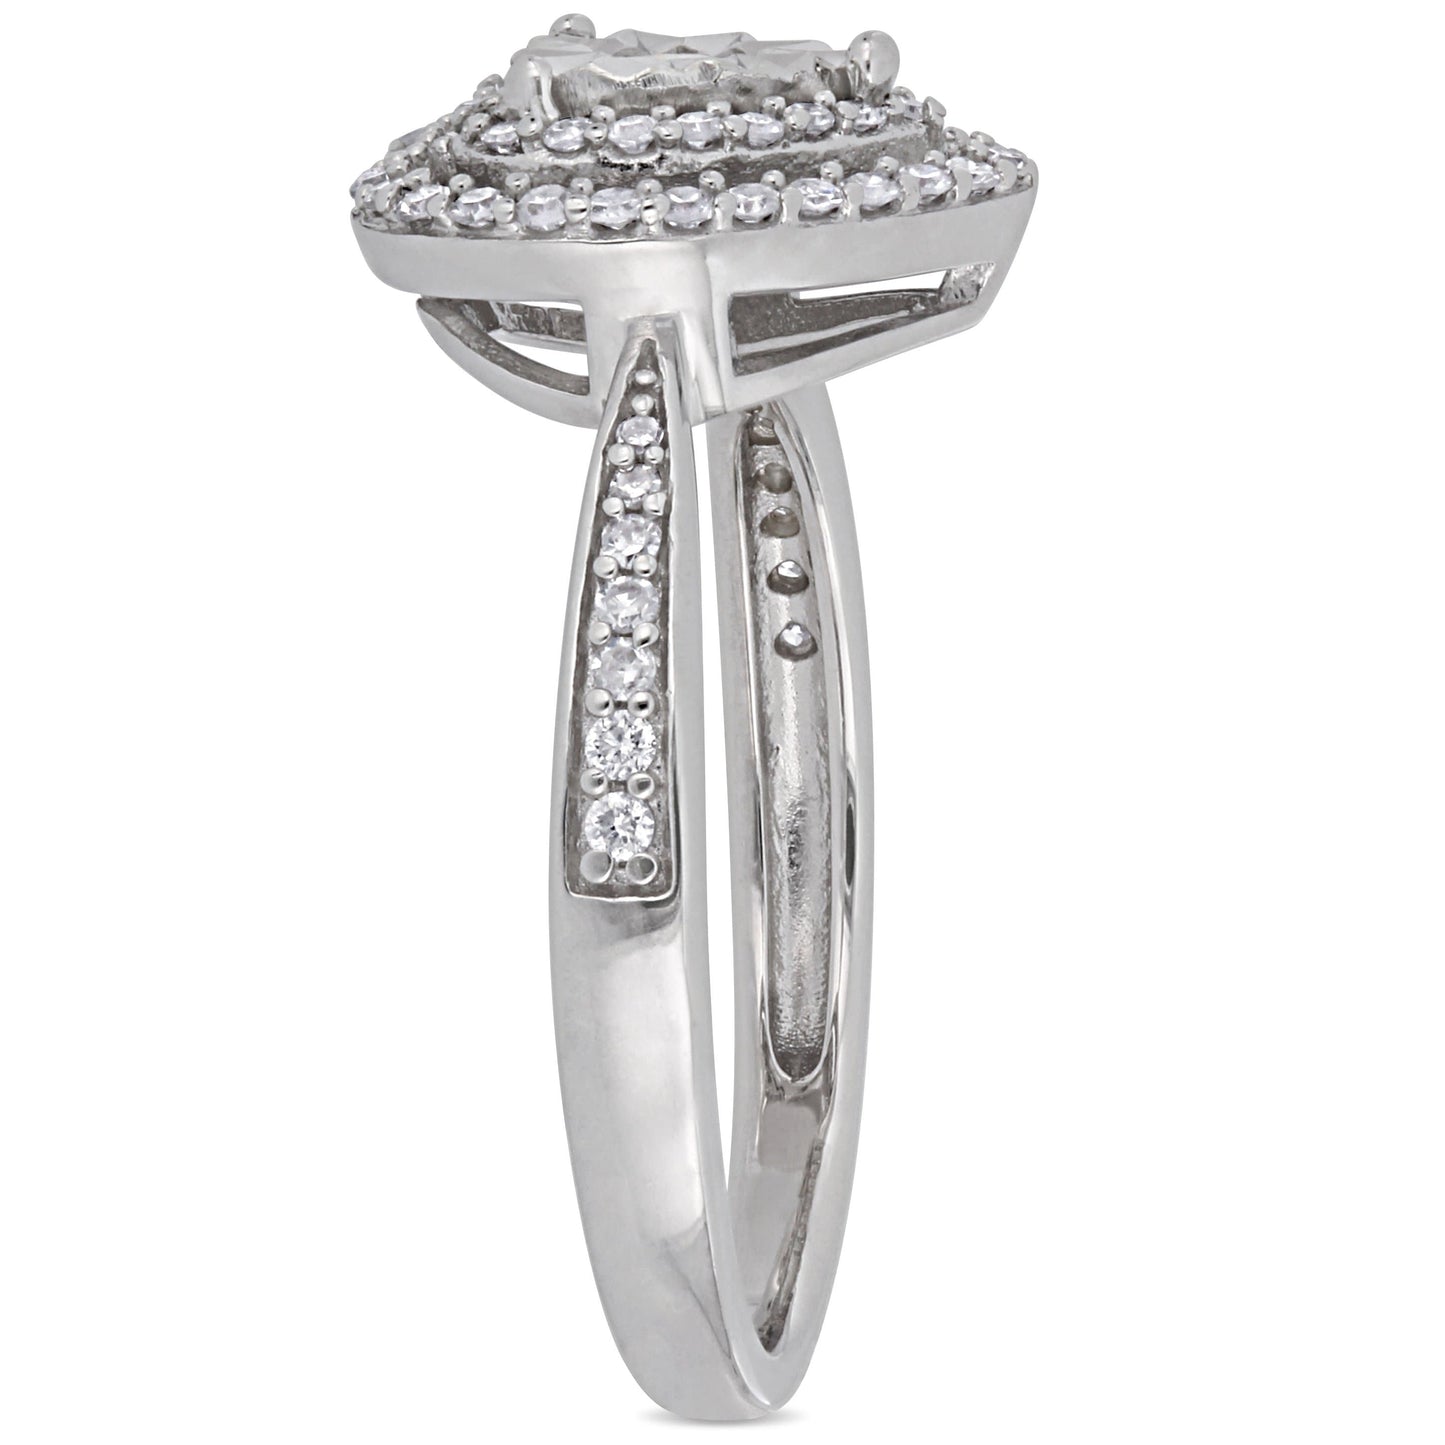 Julie Leah Heart Diamond Ring in Sterling Silver